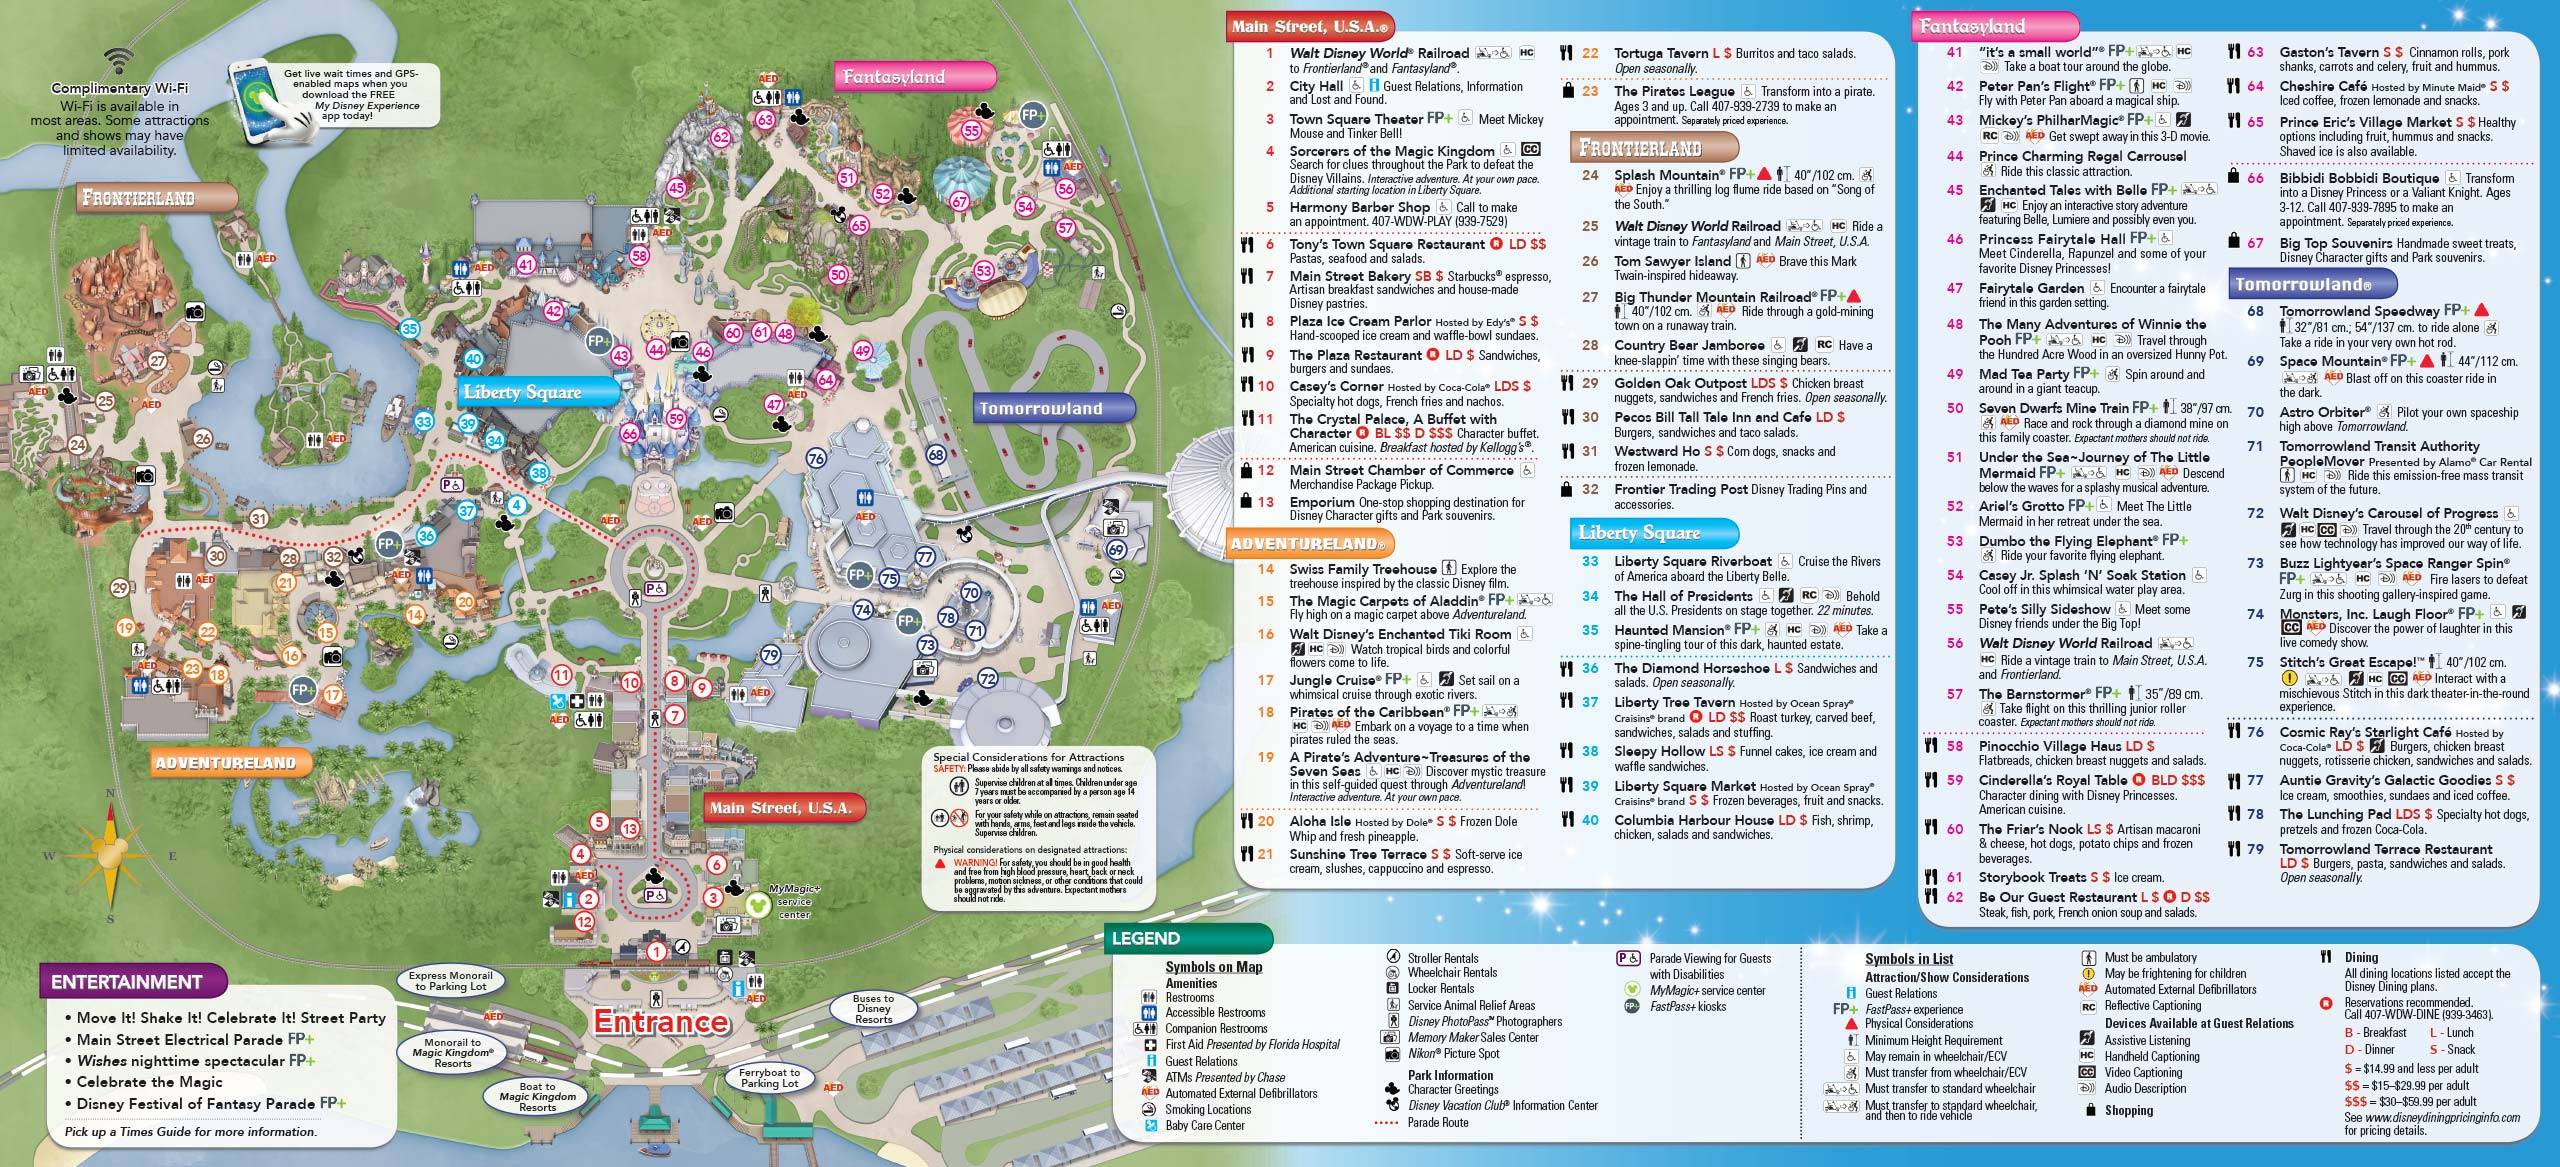 New Magic Kingdom guide map featuring Seven Dwarfs Mine Train - back